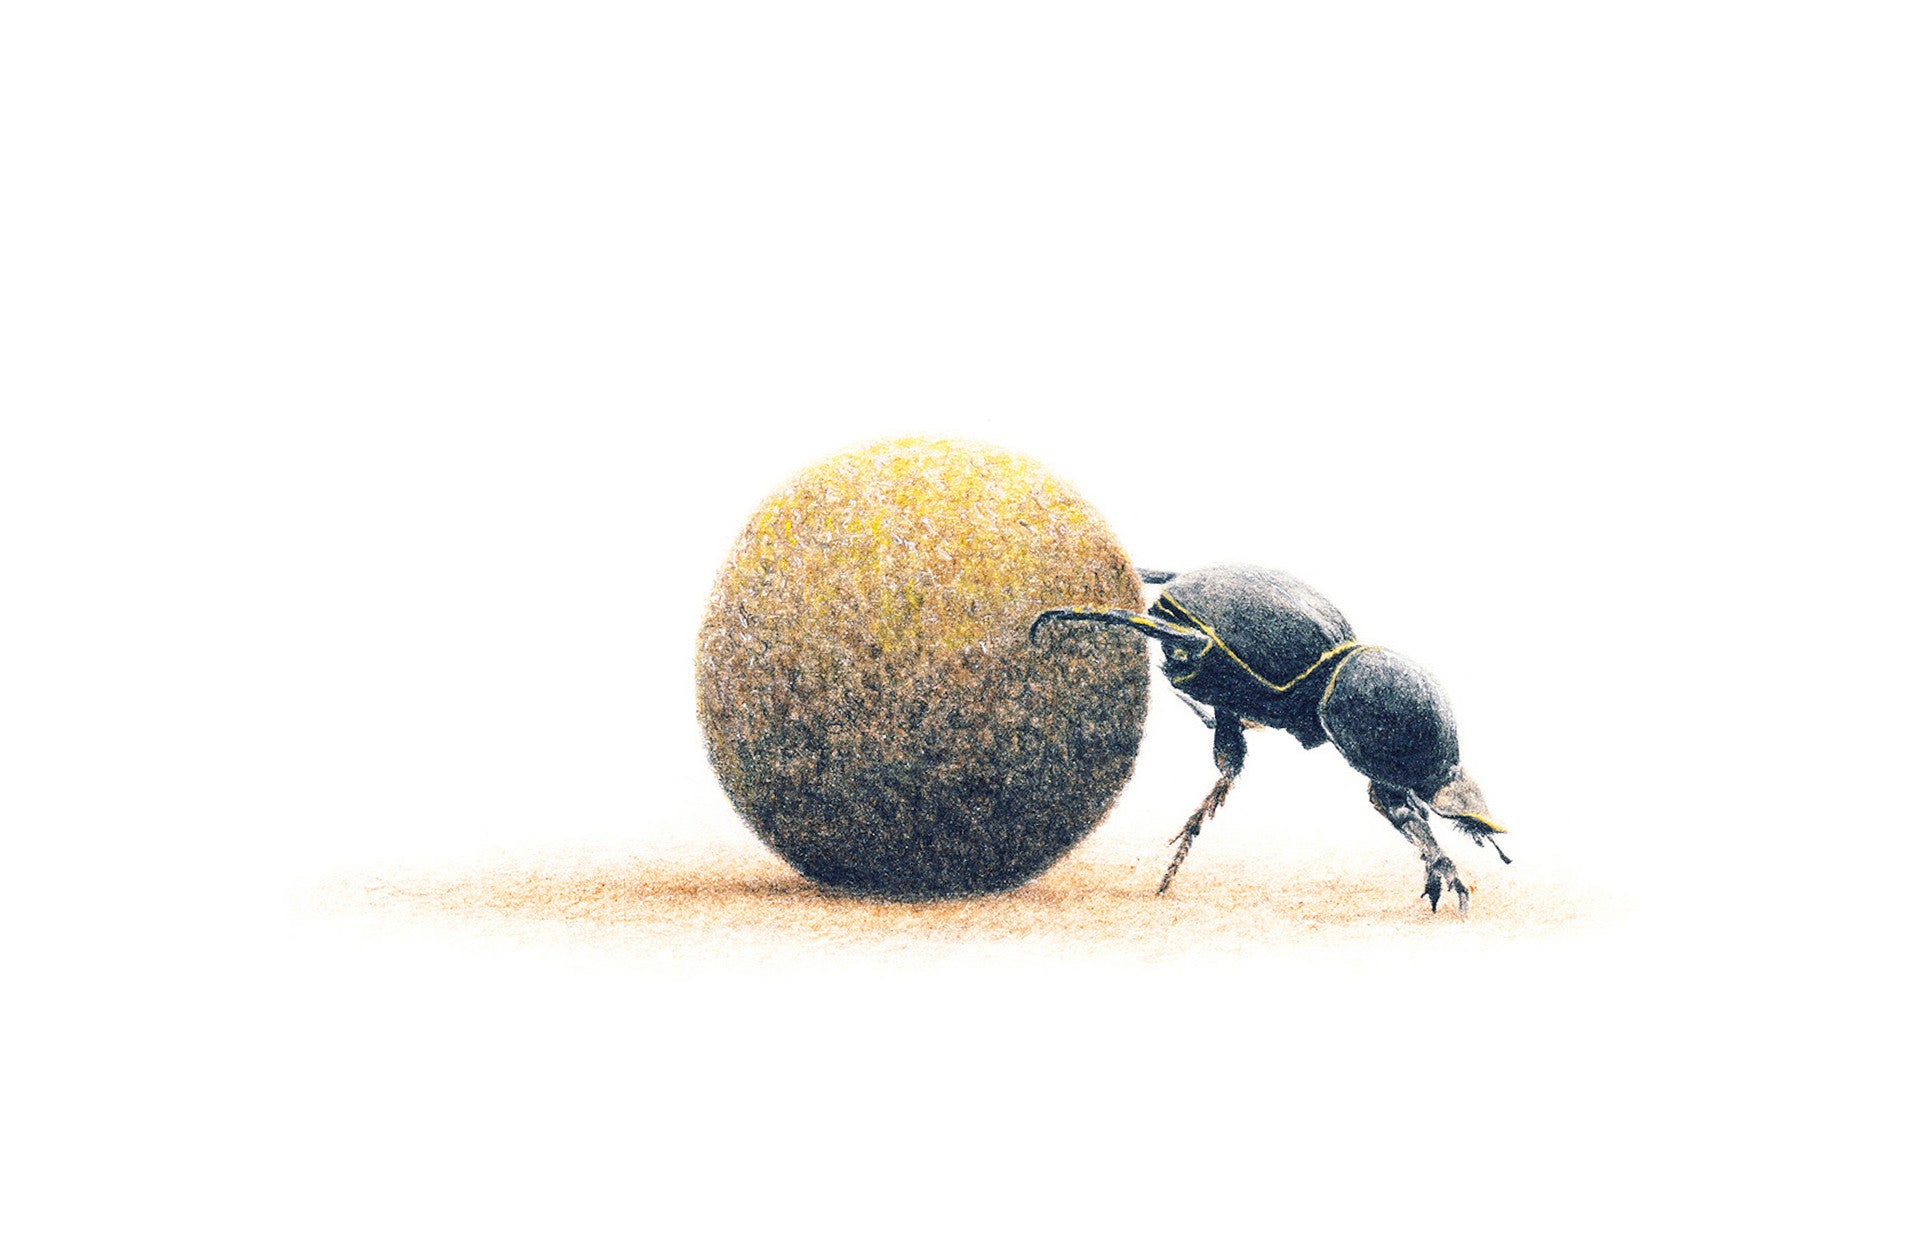 Dung Beetle artwork mounted print